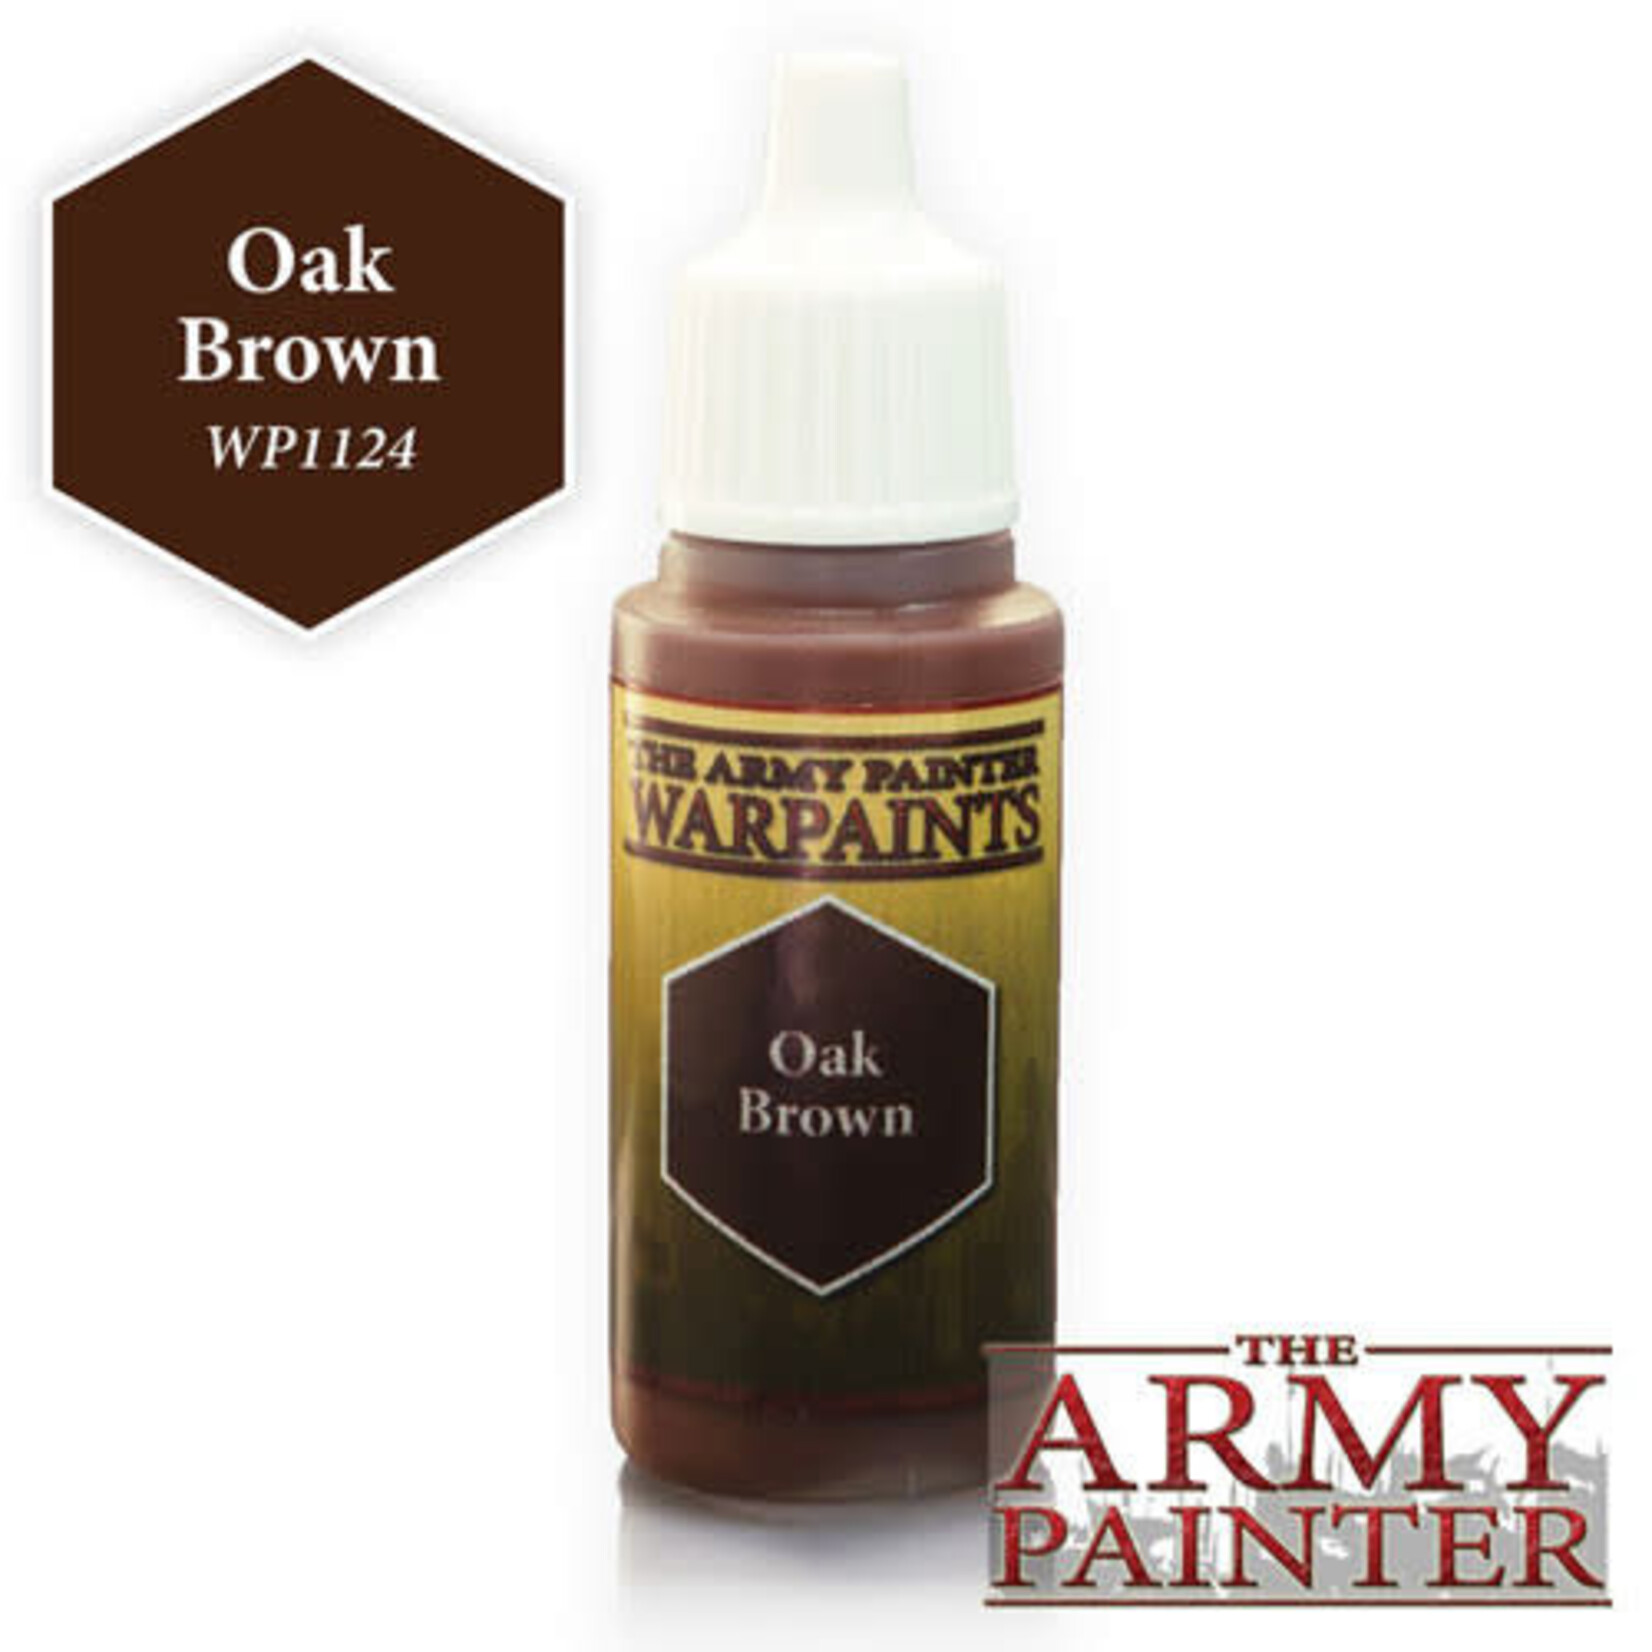 The Army Painter Warpaints: Oak Brown 18ml